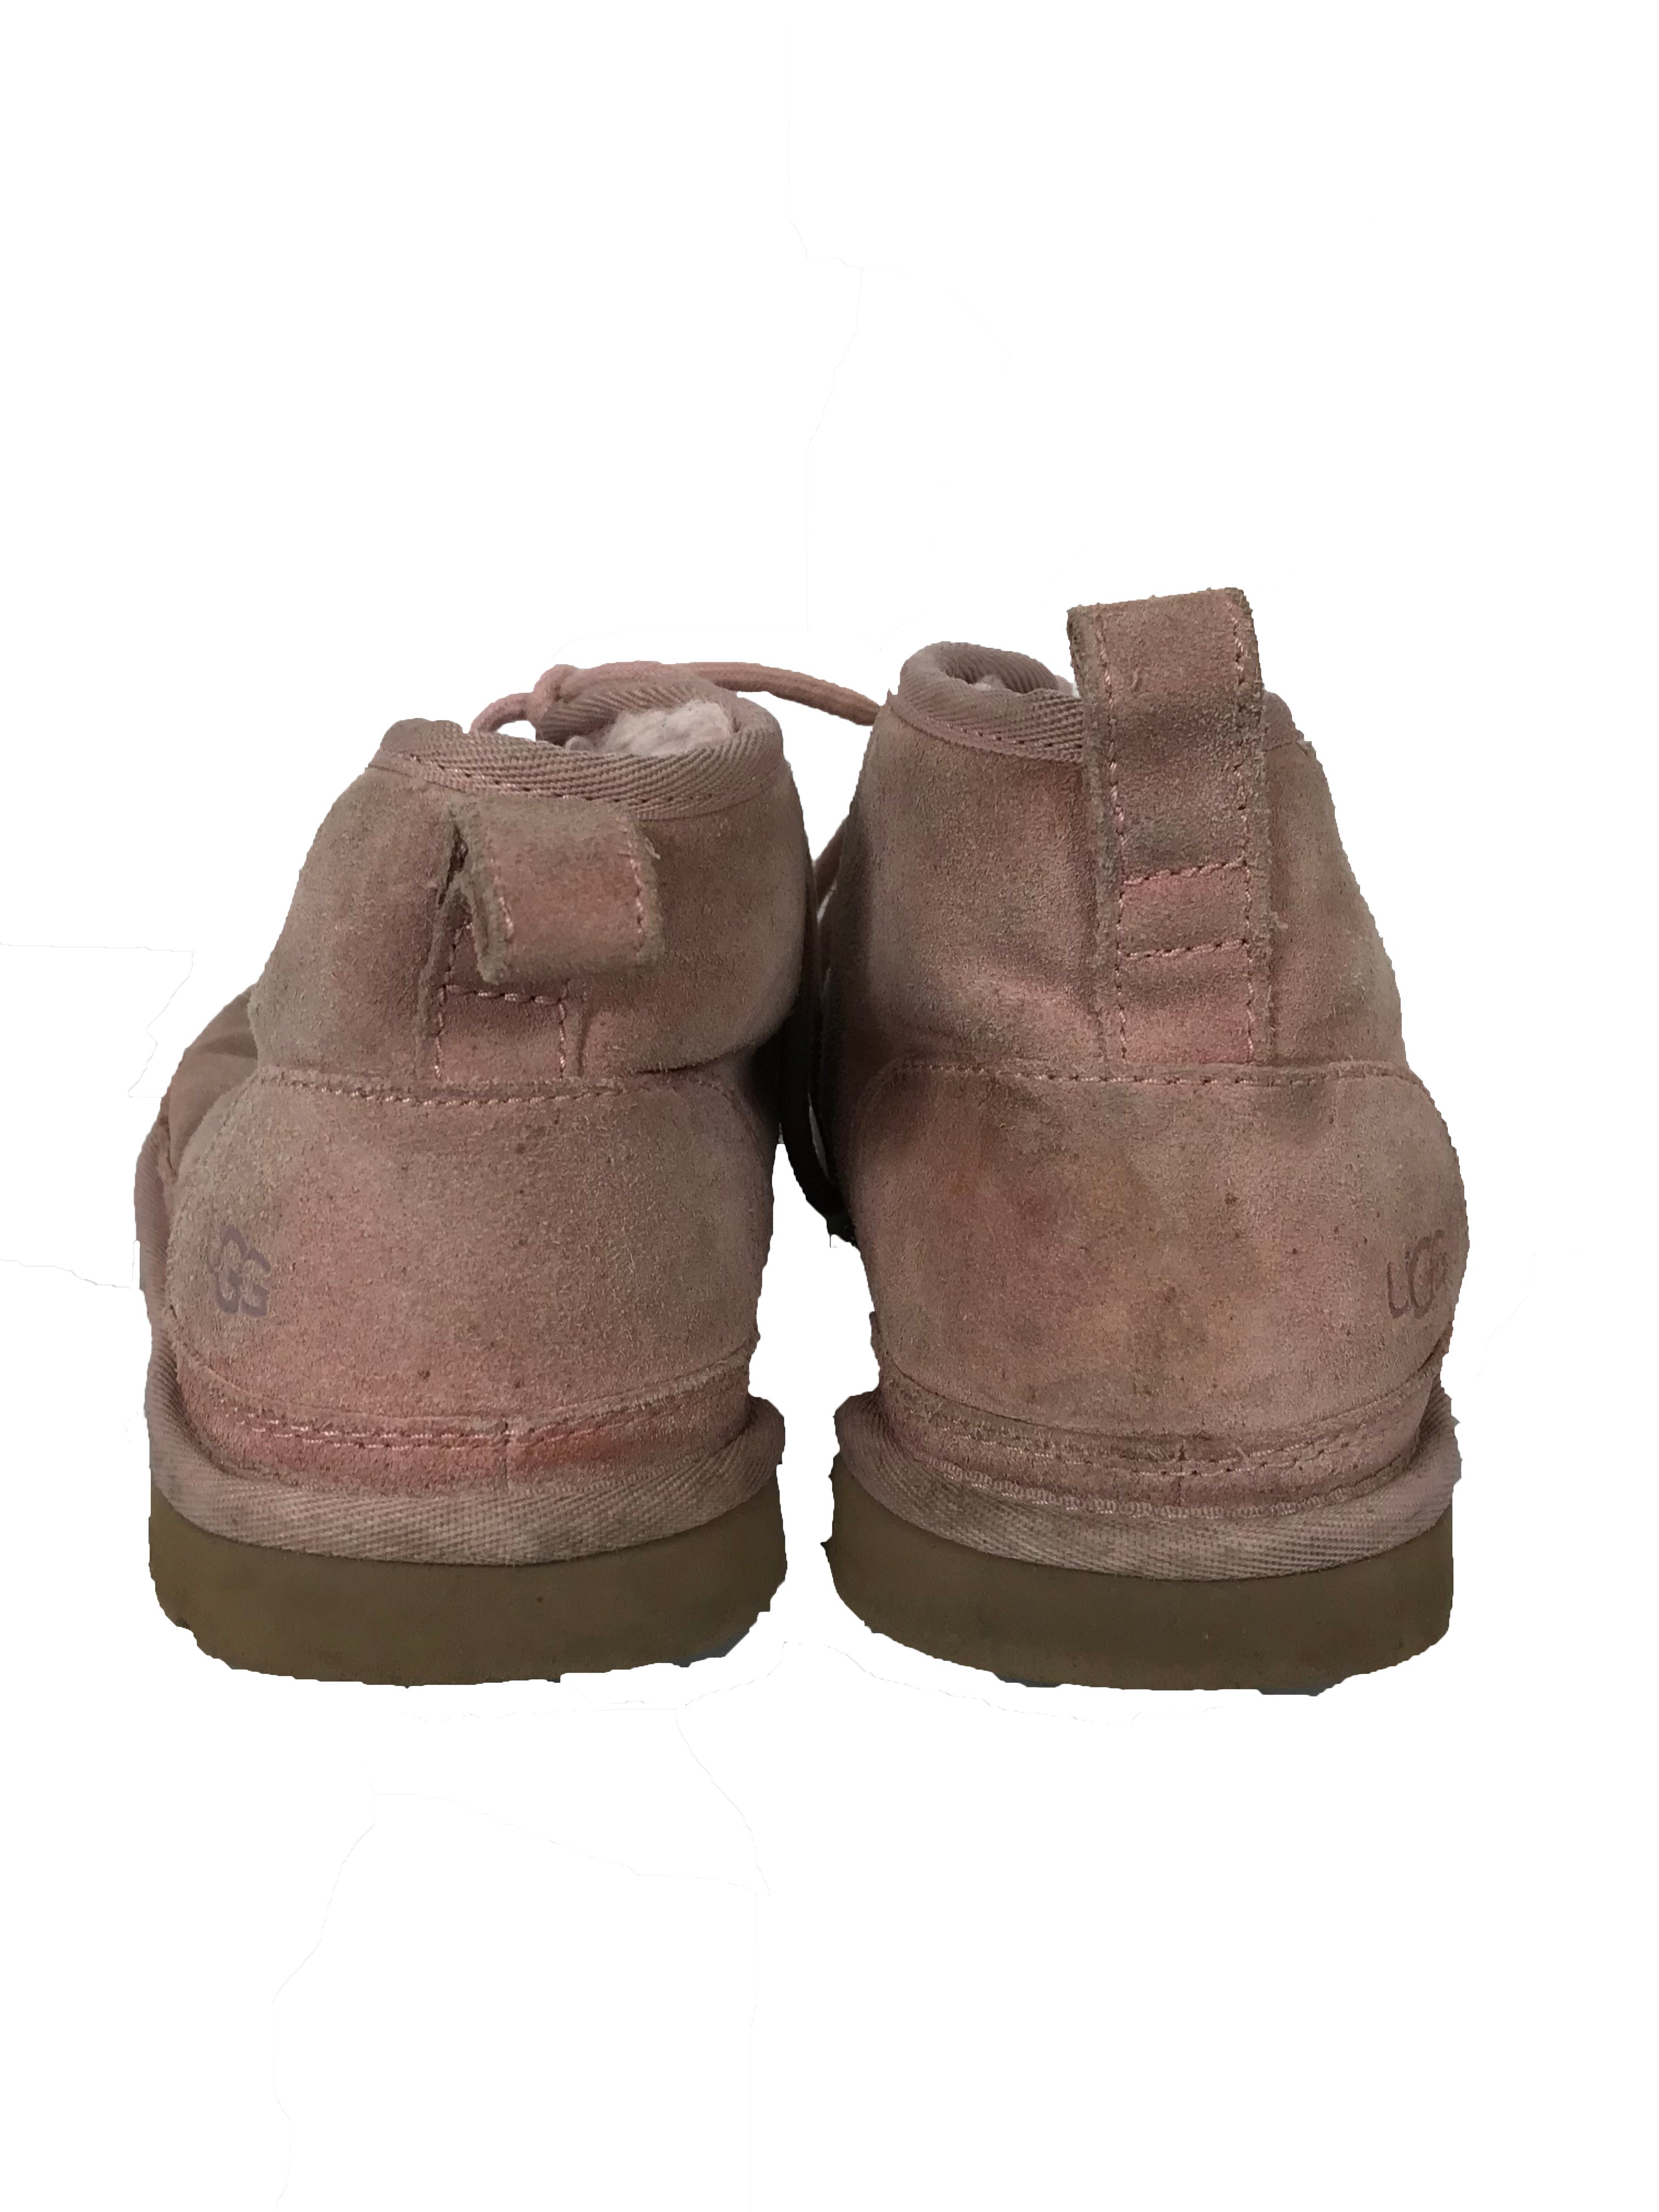 Ugg Neumel Pink Suede Sheepskin Ankle Boots Women's Size 8